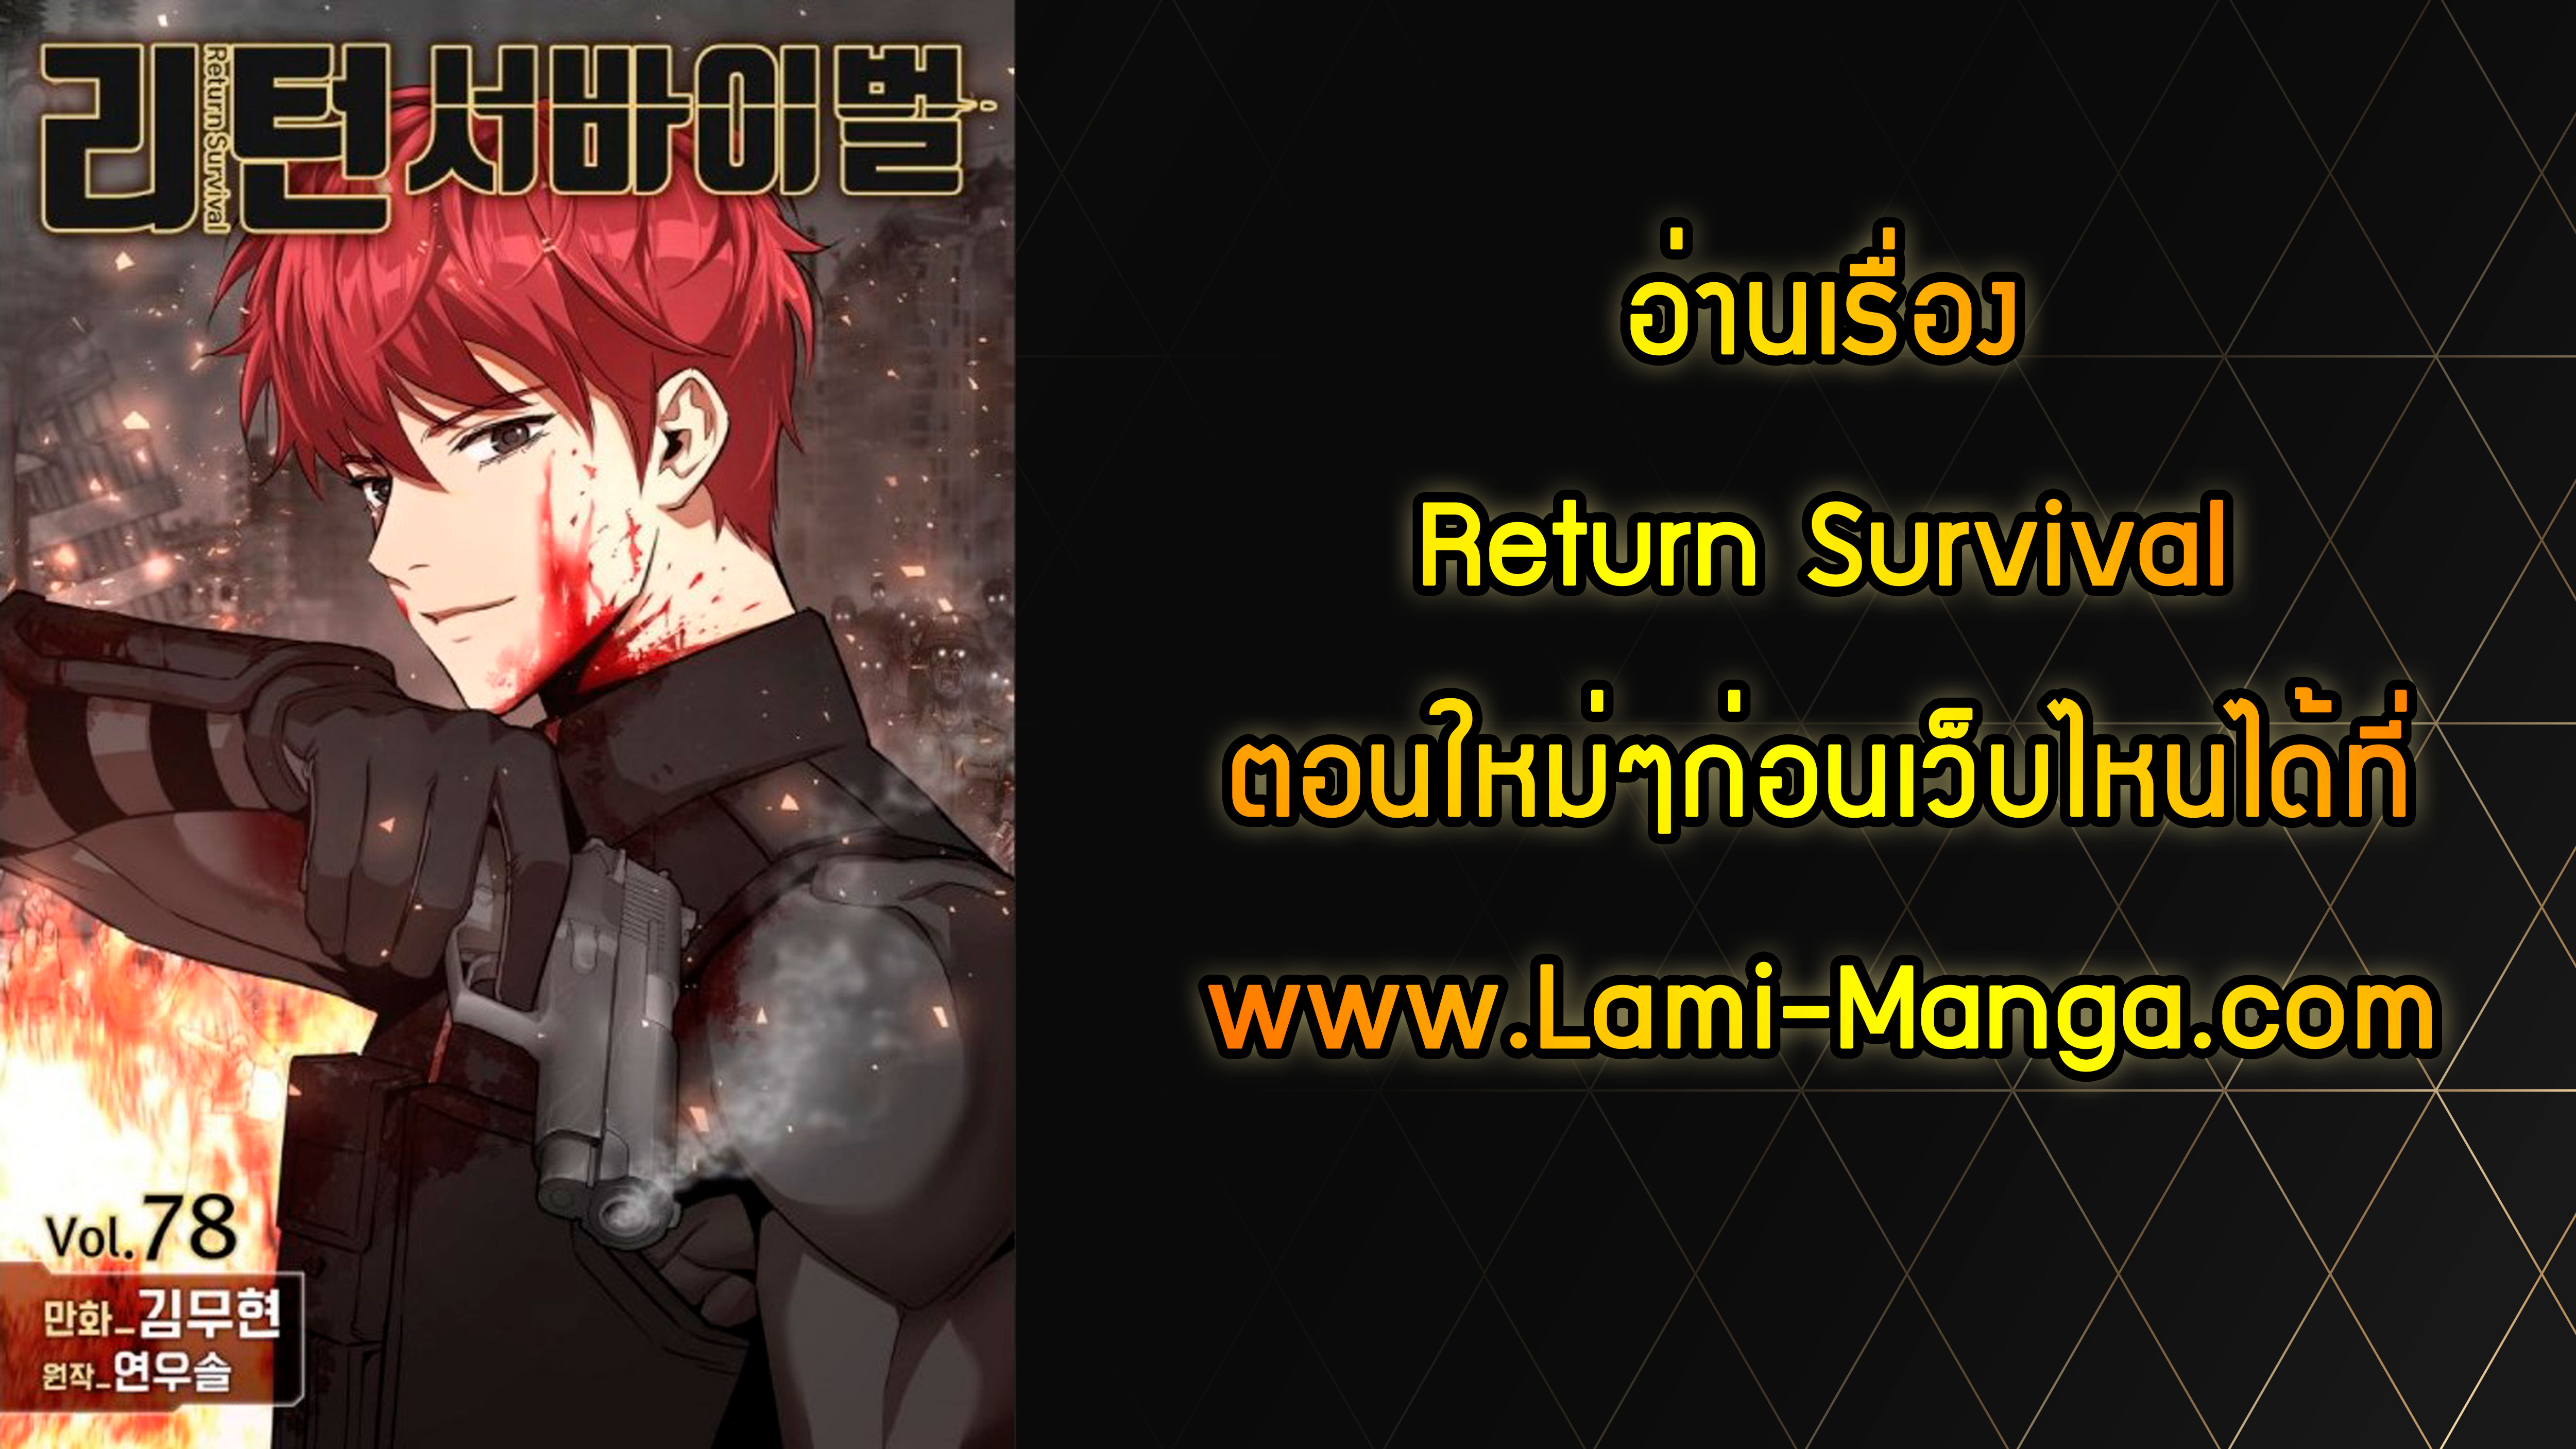 Return Survival29 31